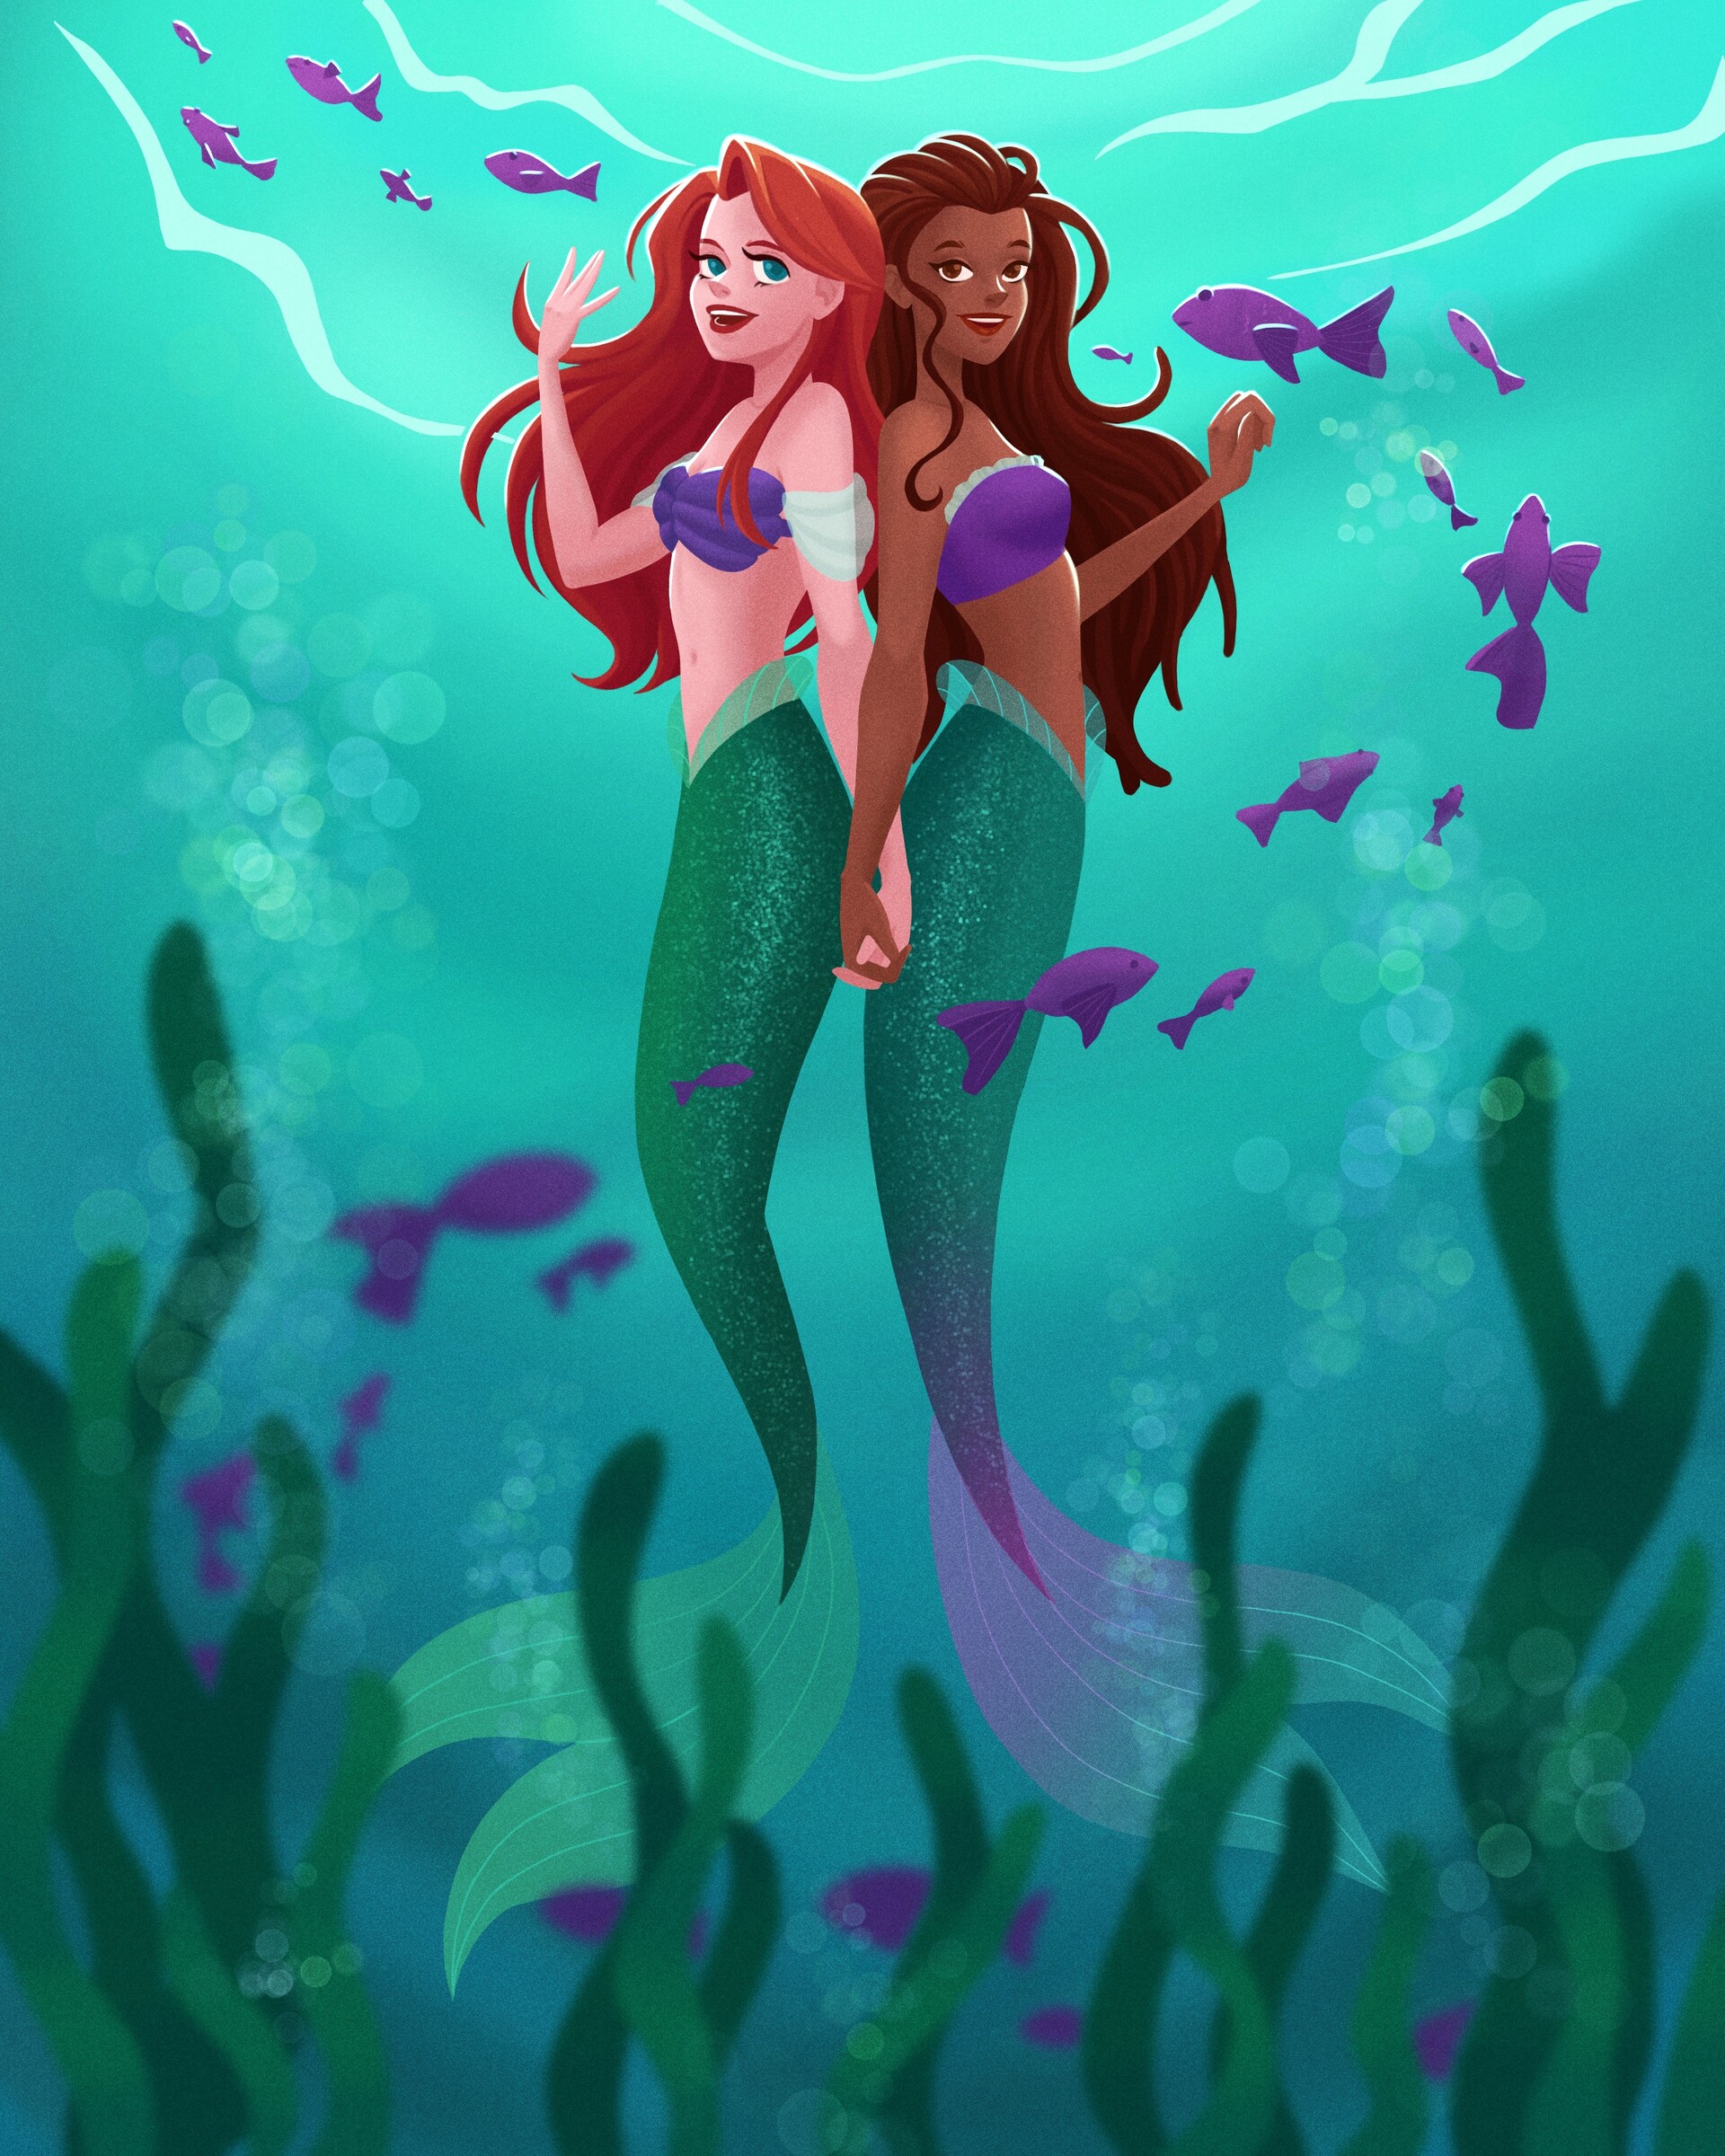 ArtStation - Two versions of the Little Mermaid